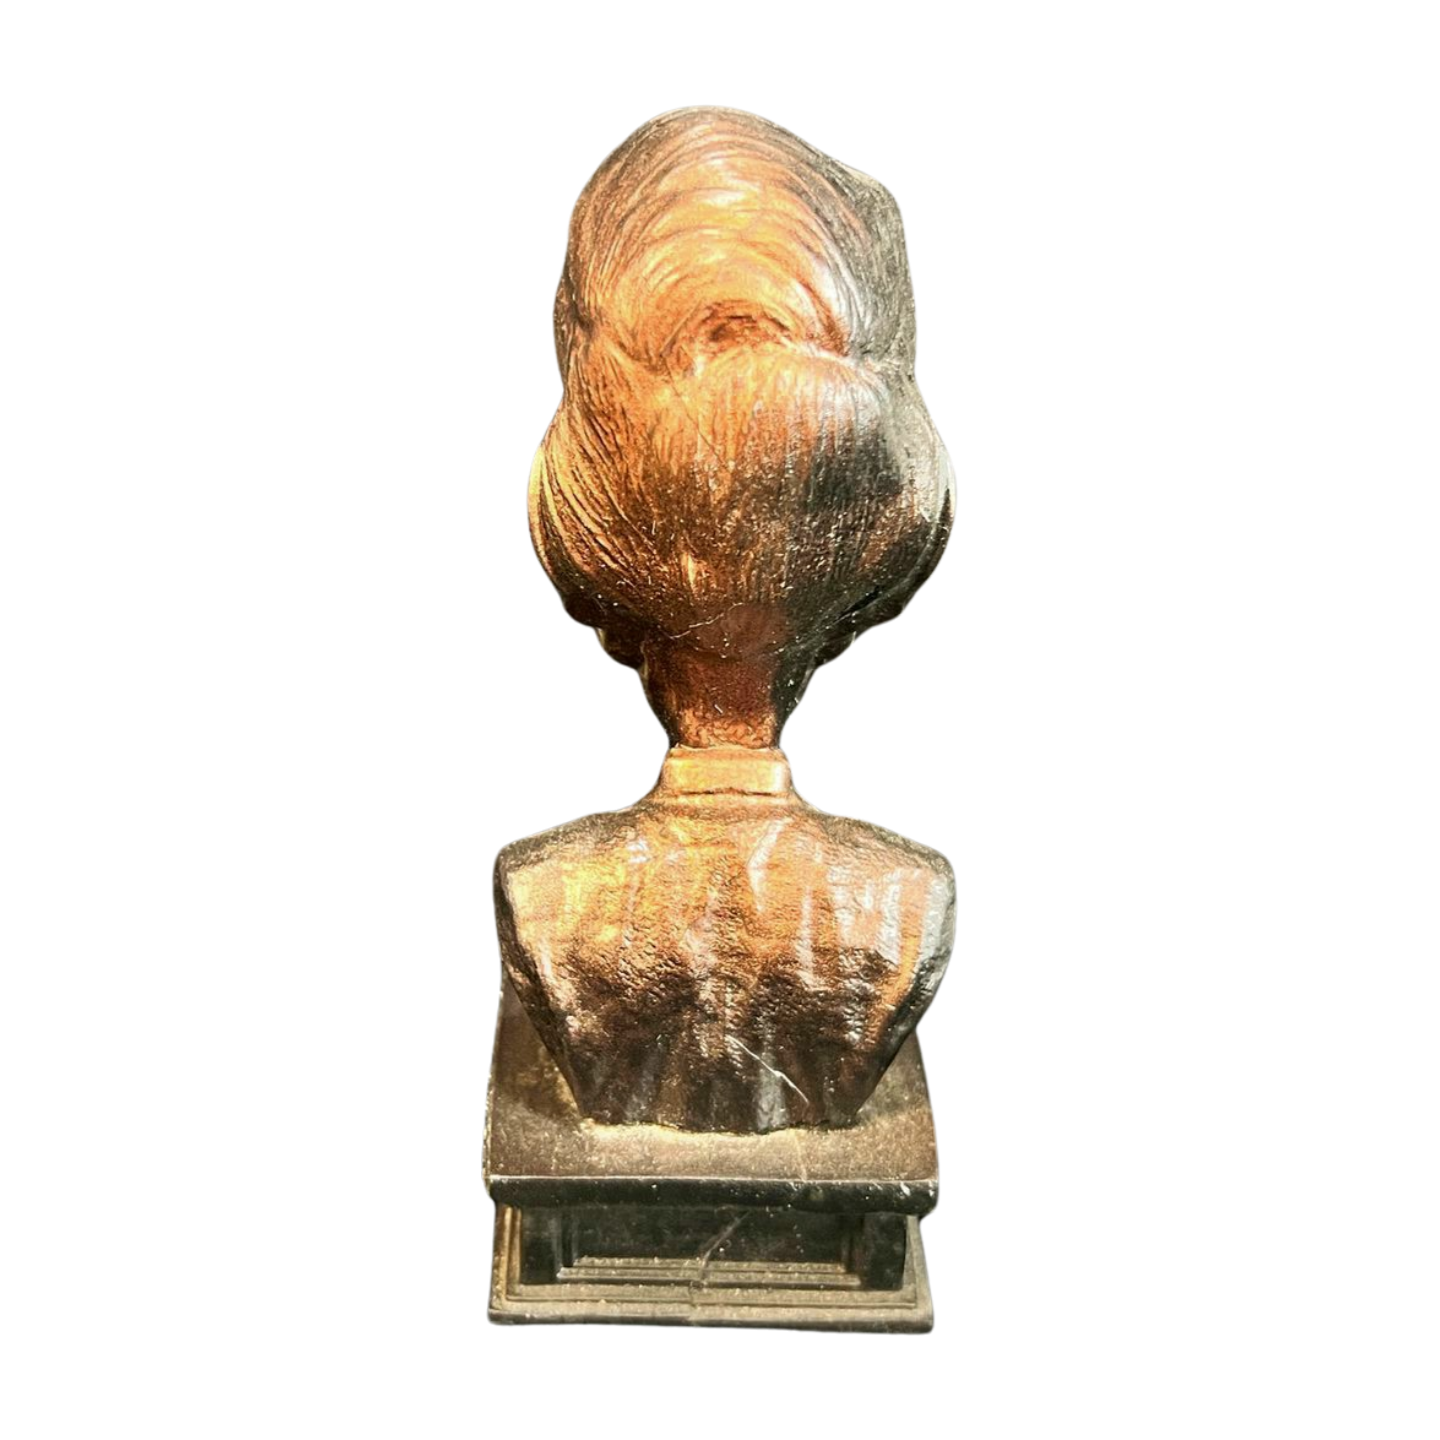 Limited Edition Bookshelf Bust of Arturo de Ascanio